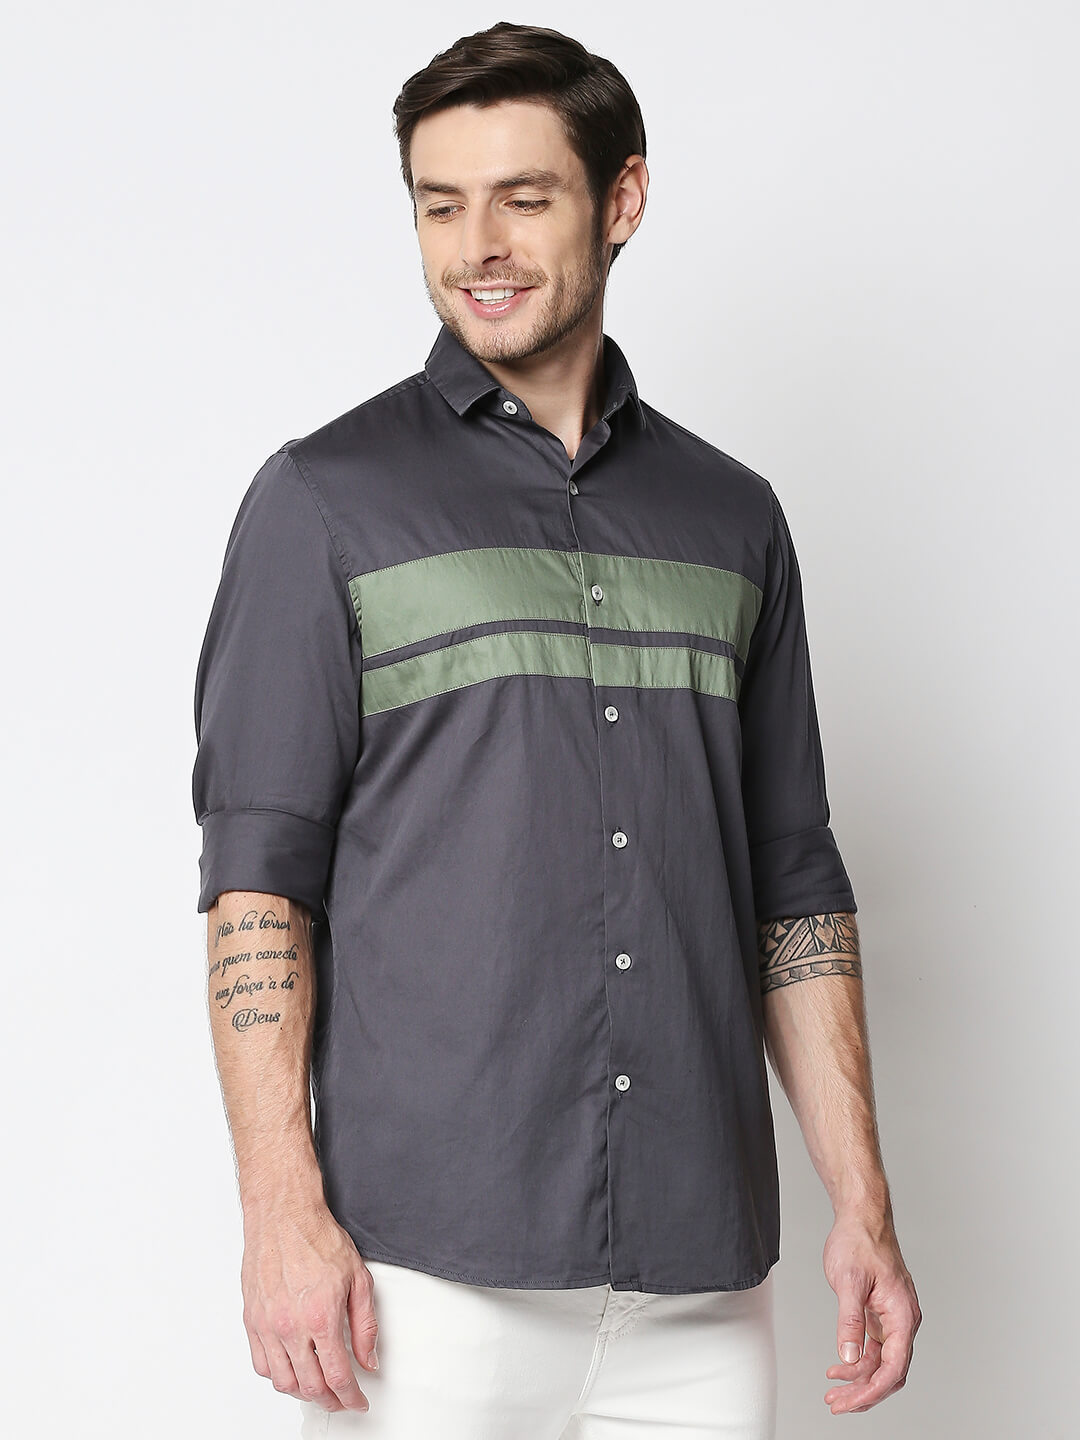 The Manaca Men Partywear Shirt- Grey & Sea-green Stripe